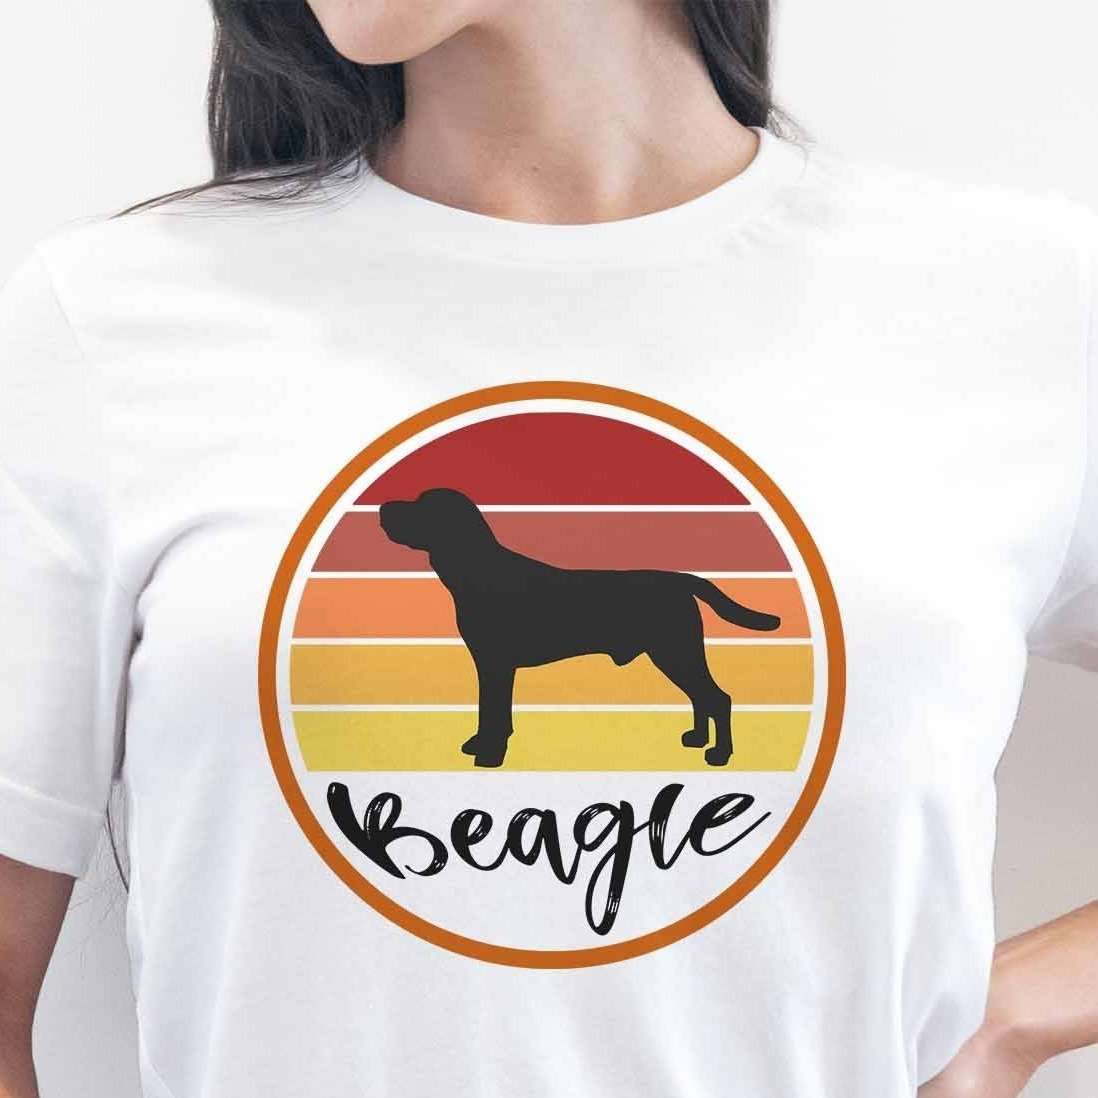 Beagle - My Custom Tee Party